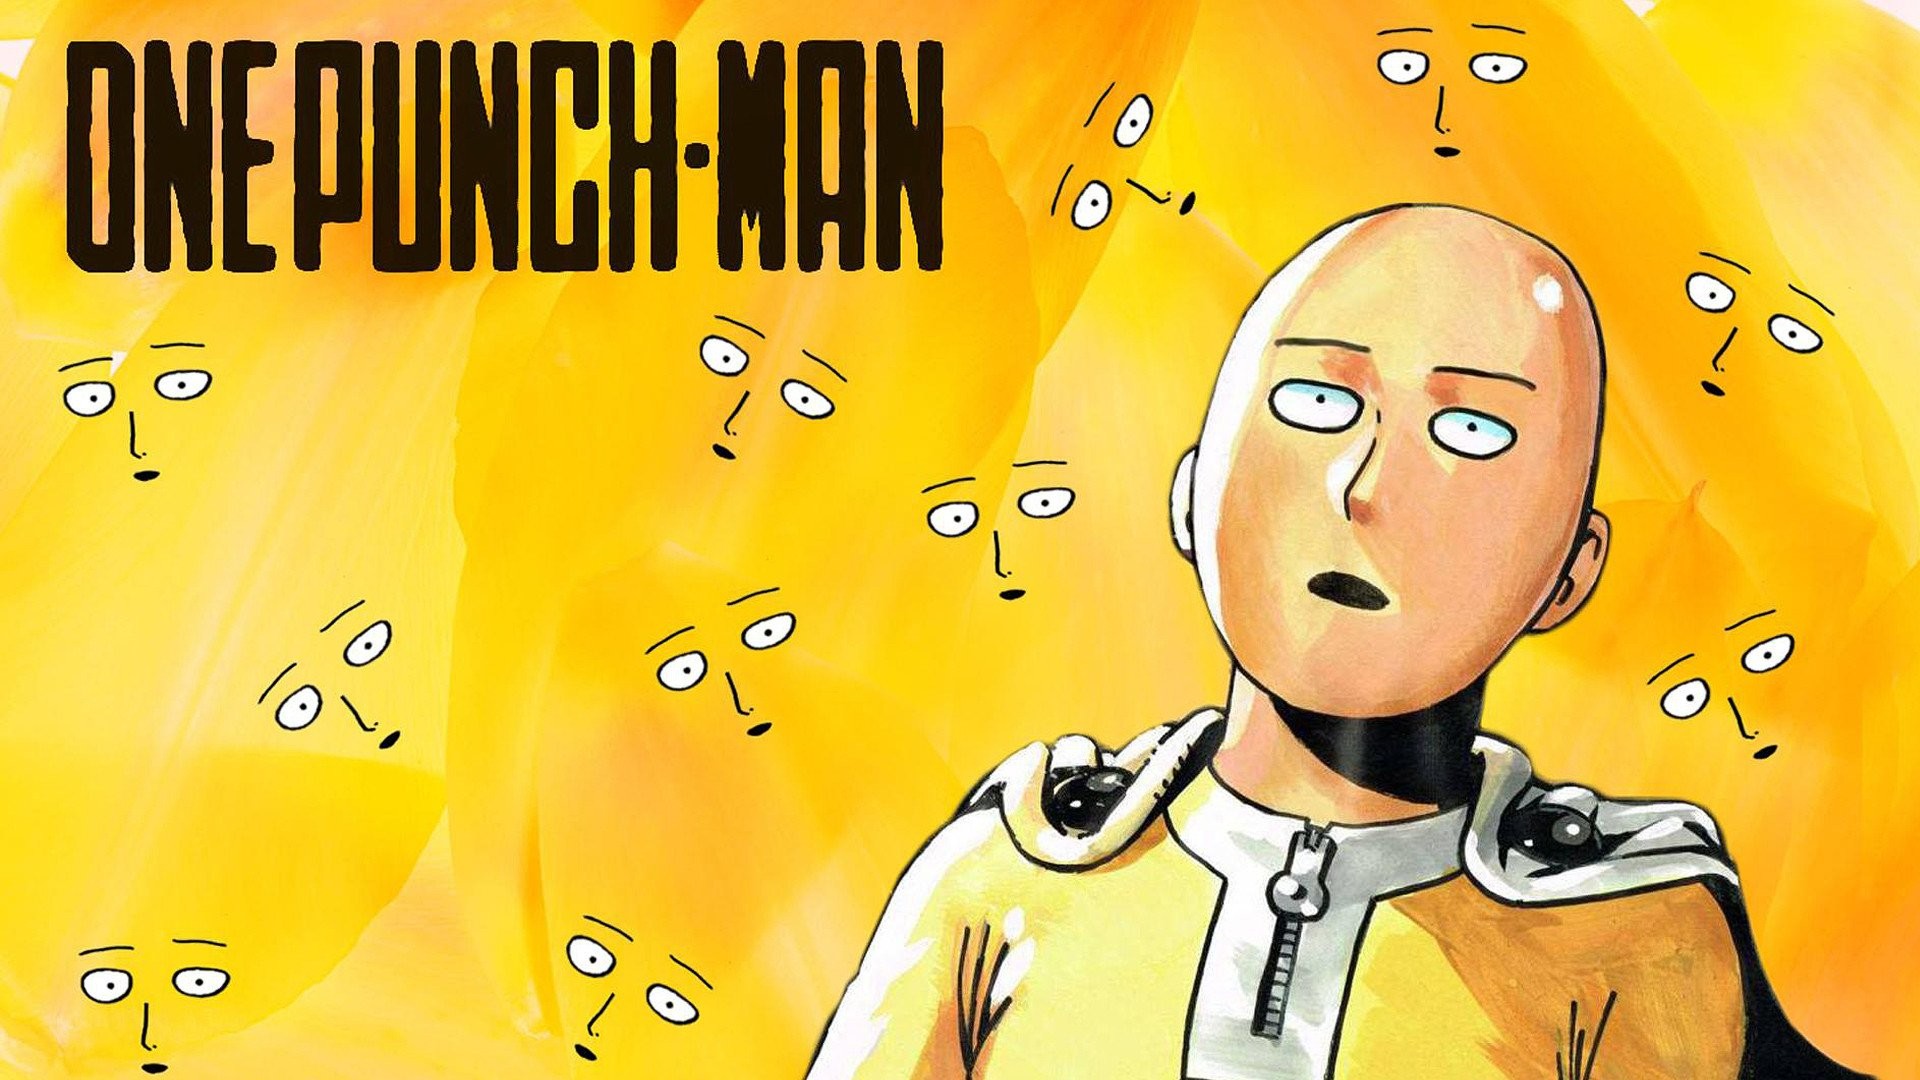 Anime – One-Punch Man Saitama (One-Punch Man) Wallpaper